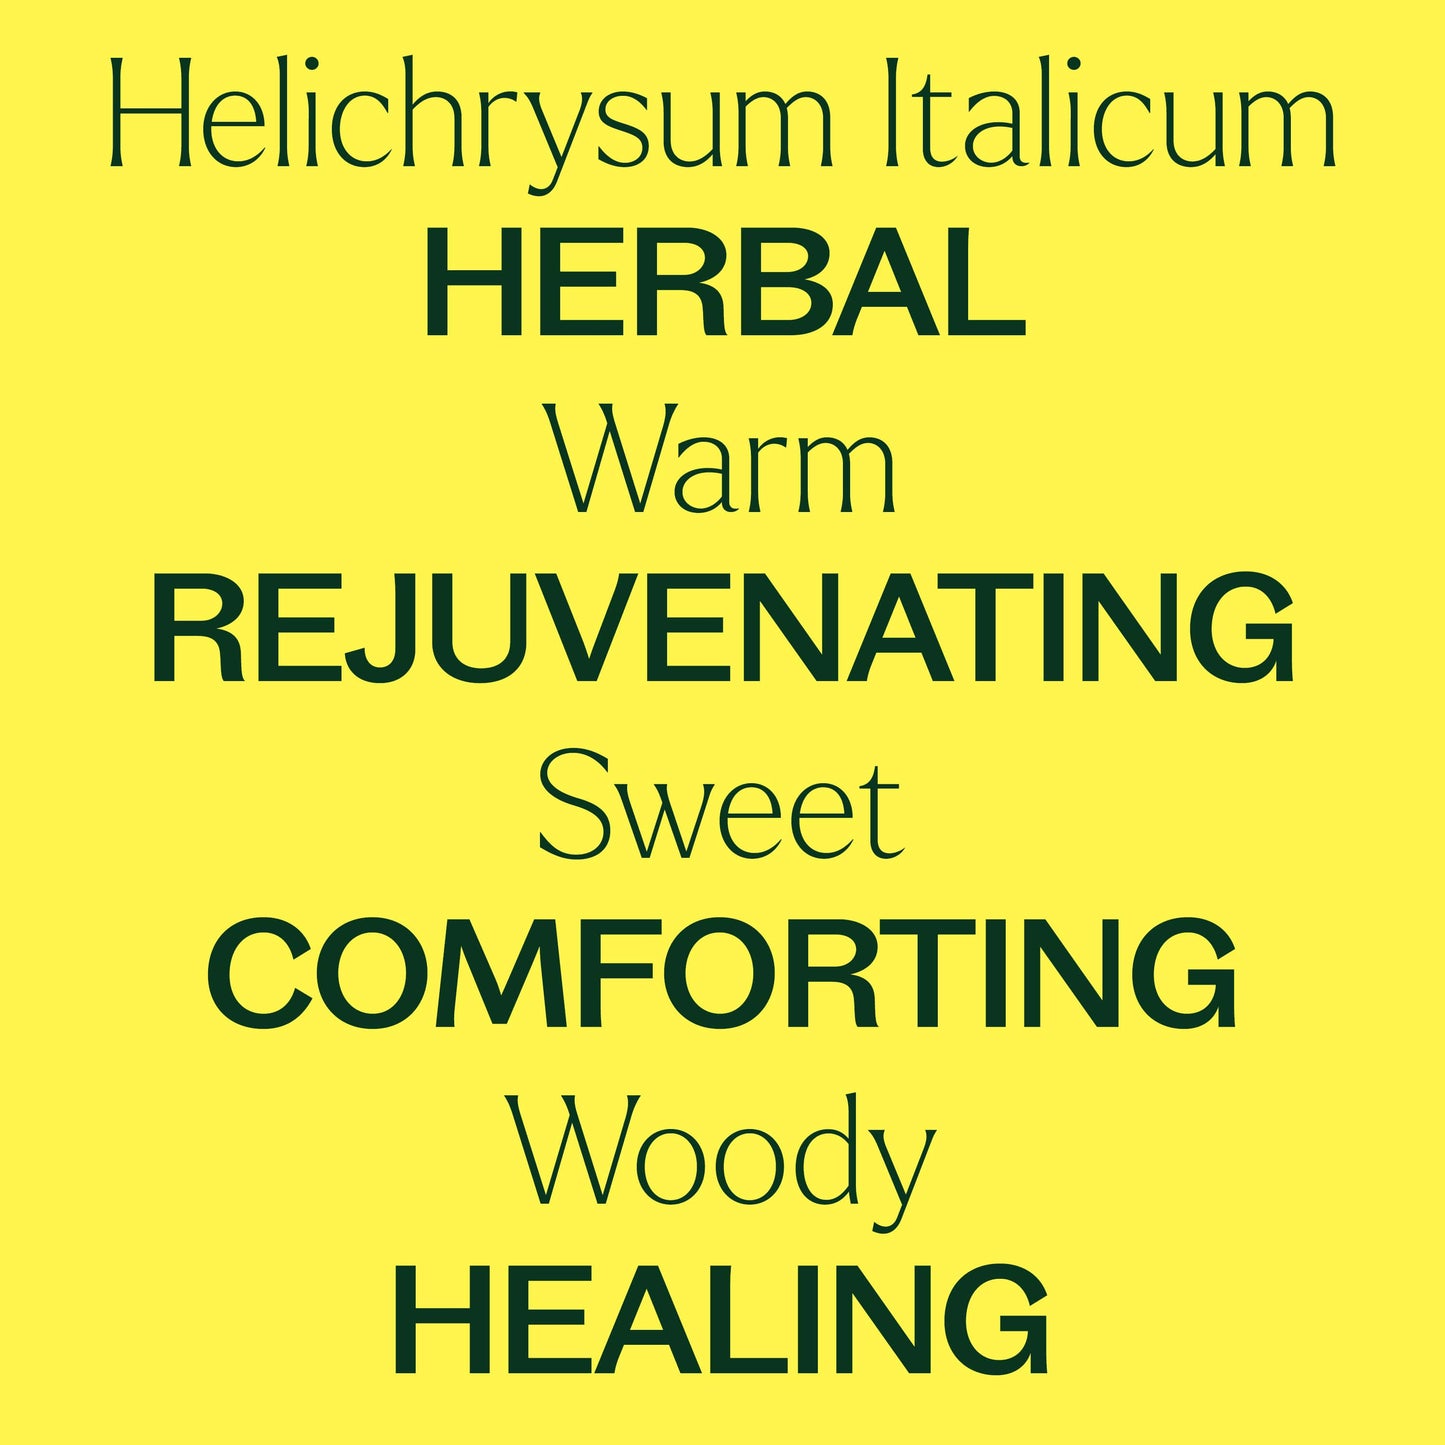 Organic Helichrysum Italicum Essential Oil is herbal, warm, sweet, comforting, woody and healing.